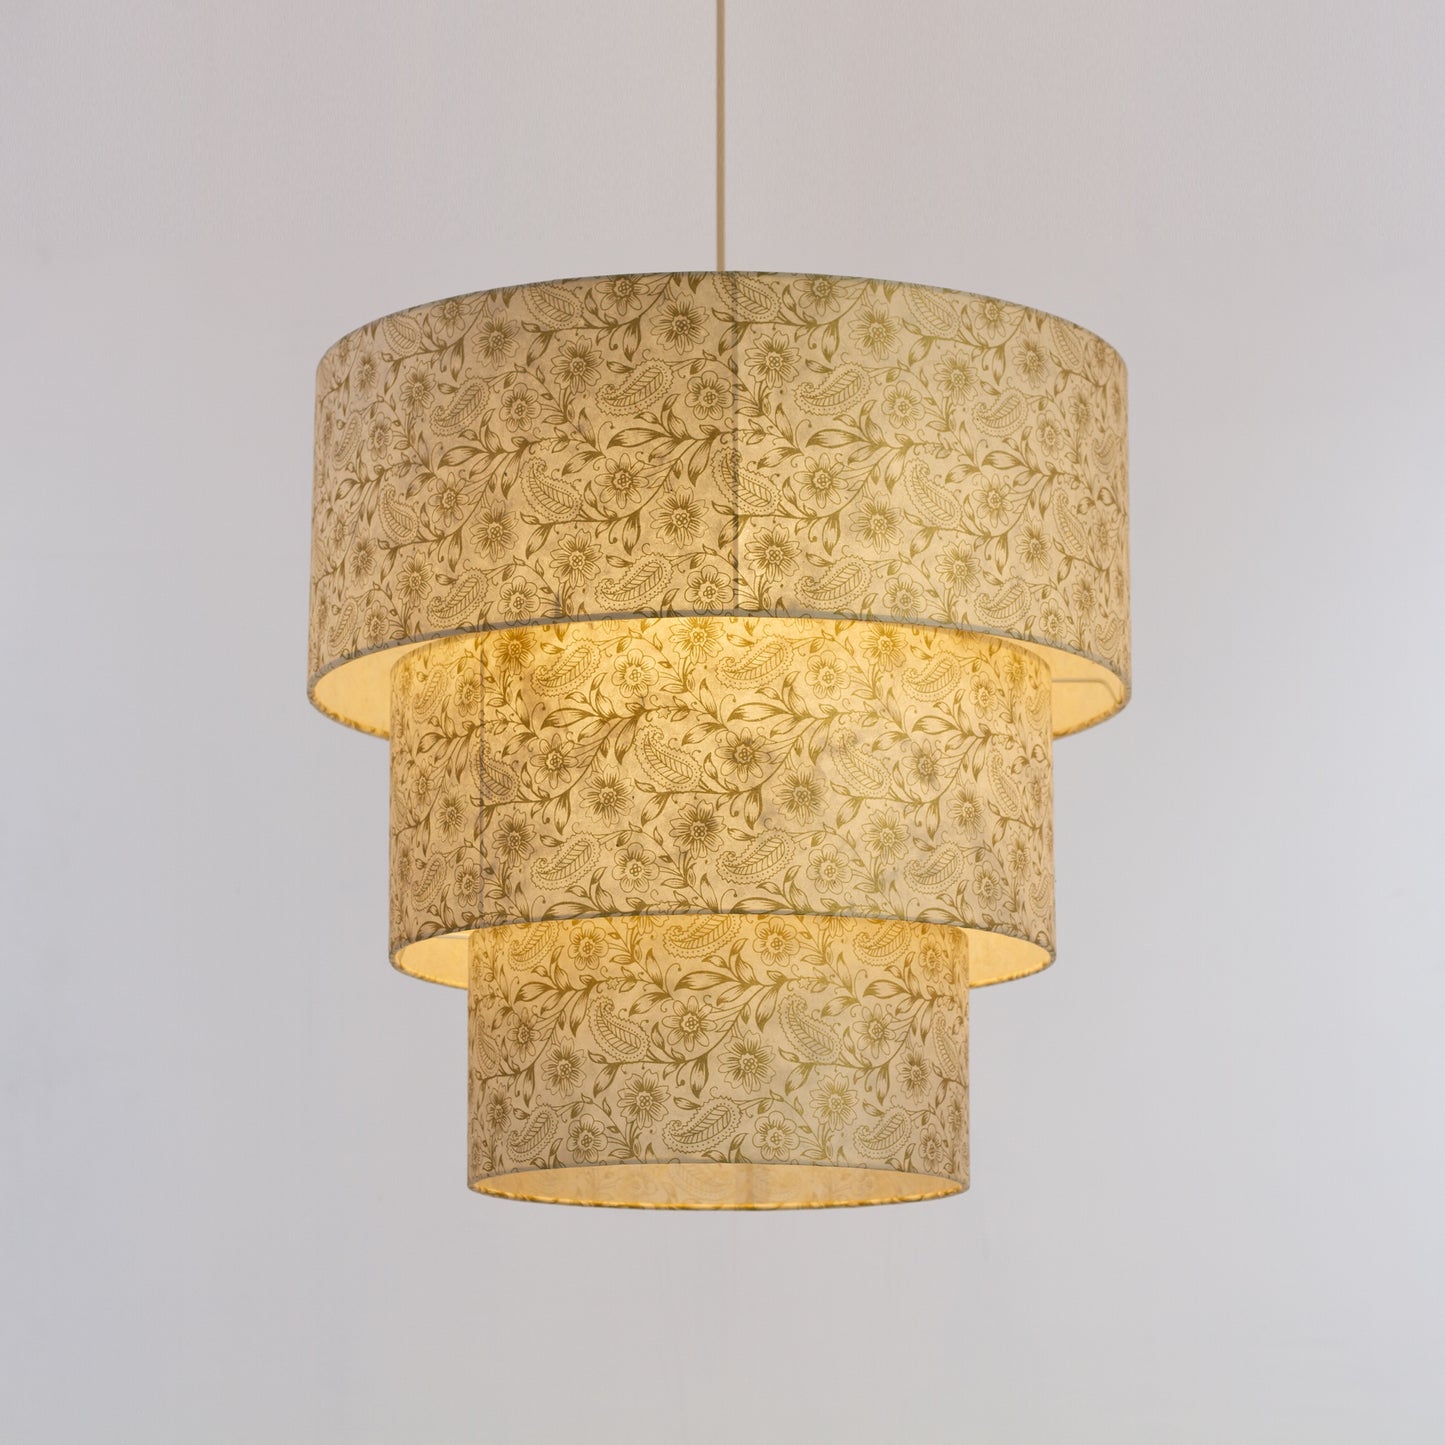 3 Tier Lamp Shade - P69 - Garden Gold on Natural, 50cm x 20cm, 40cm x 17.5cm & 30cm x 15cm